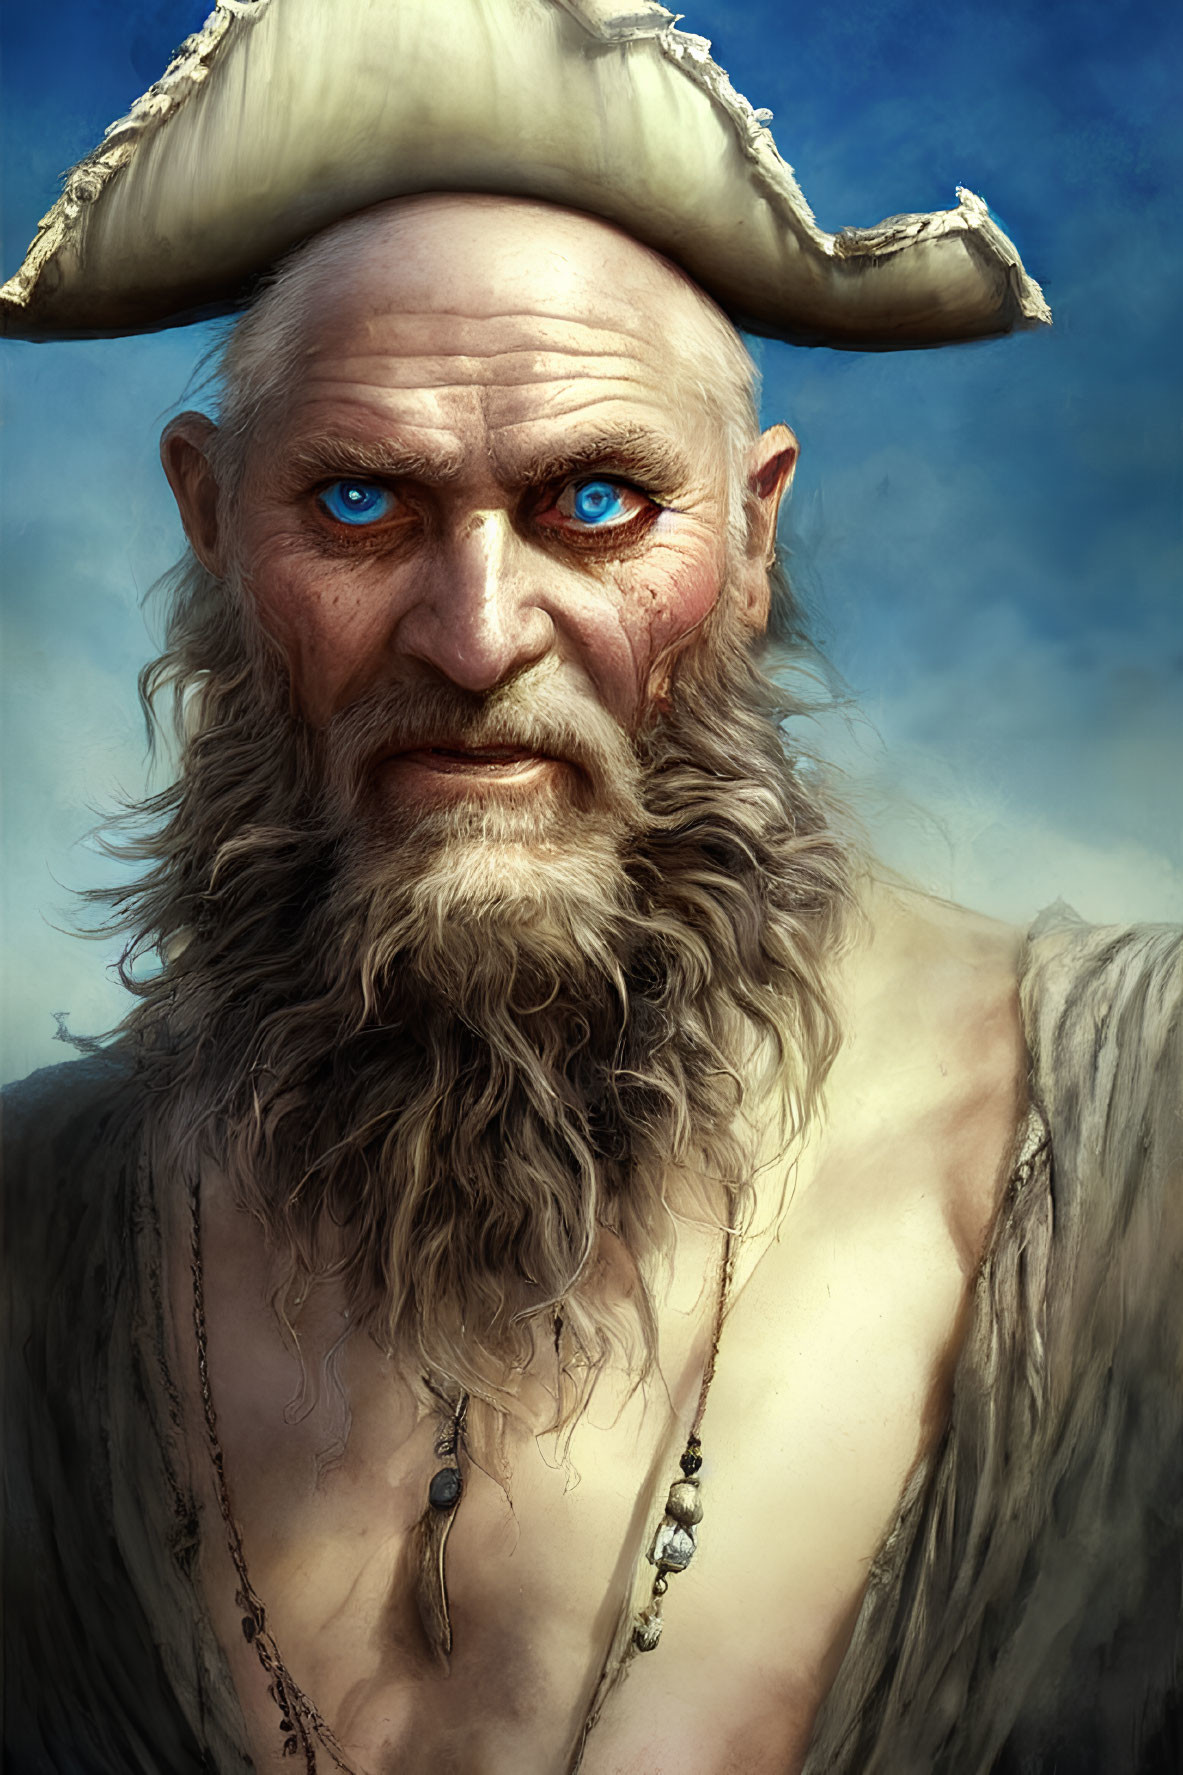 Elderly man with blue eyes in pirate attire on blue background